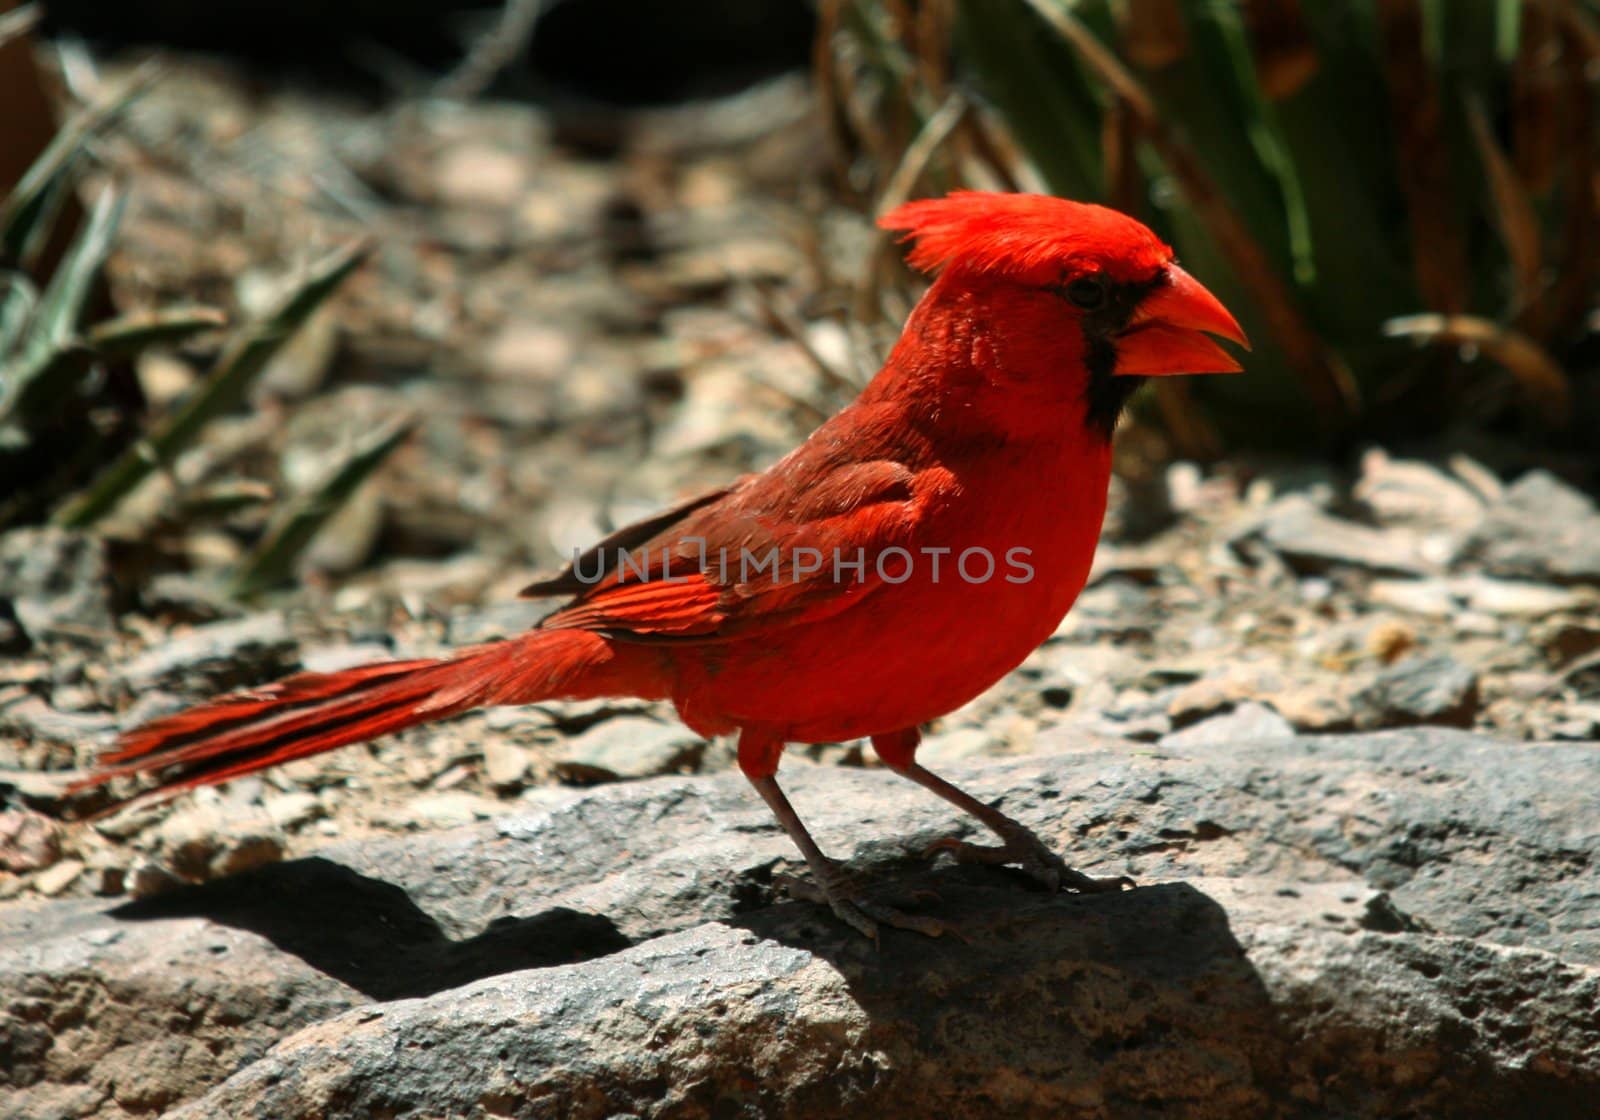 Arizona Cardinal by Auldwhispers